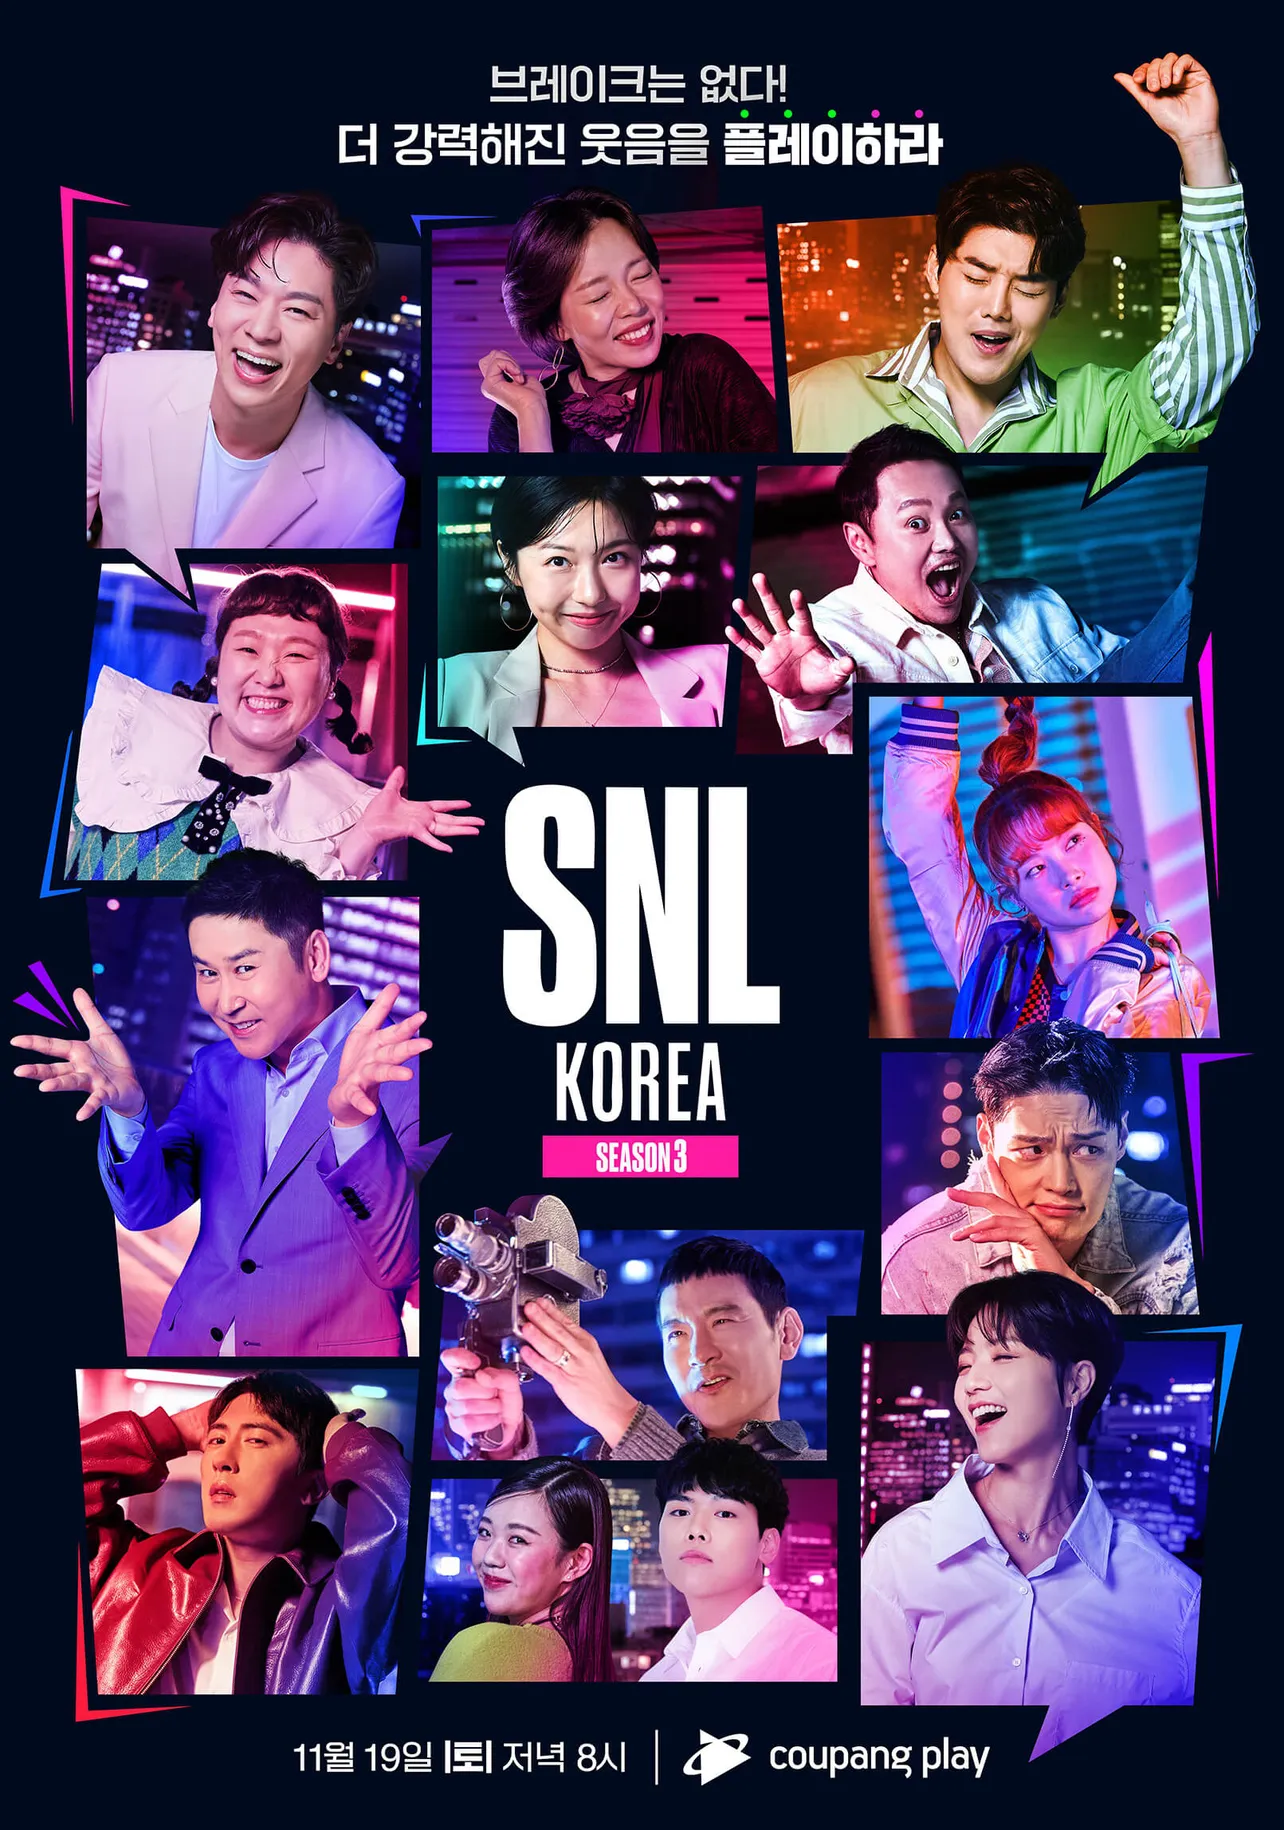 「SNL KOREA シーズン3」日本初放送